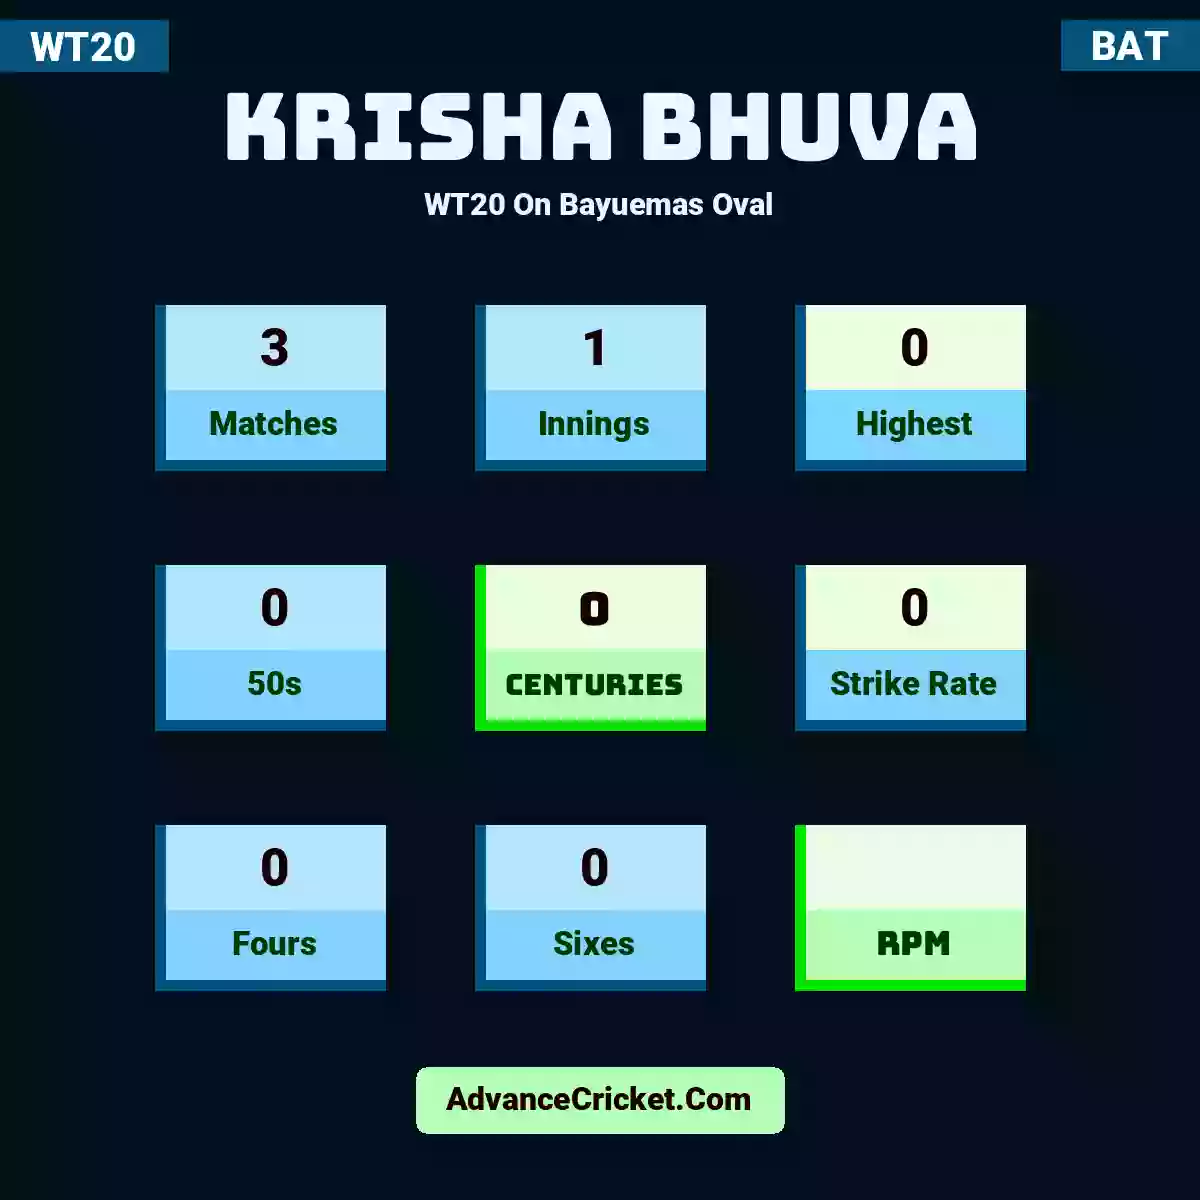 Krisha Bhuva WT20  On Bayuemas Oval, Krisha Bhuva played 3 matches, scored 0 runs as highest, 0 half-centuries, and 0 centuries, with a strike rate of 0. K.Bhuva hit 0 fours and 0 sixes.